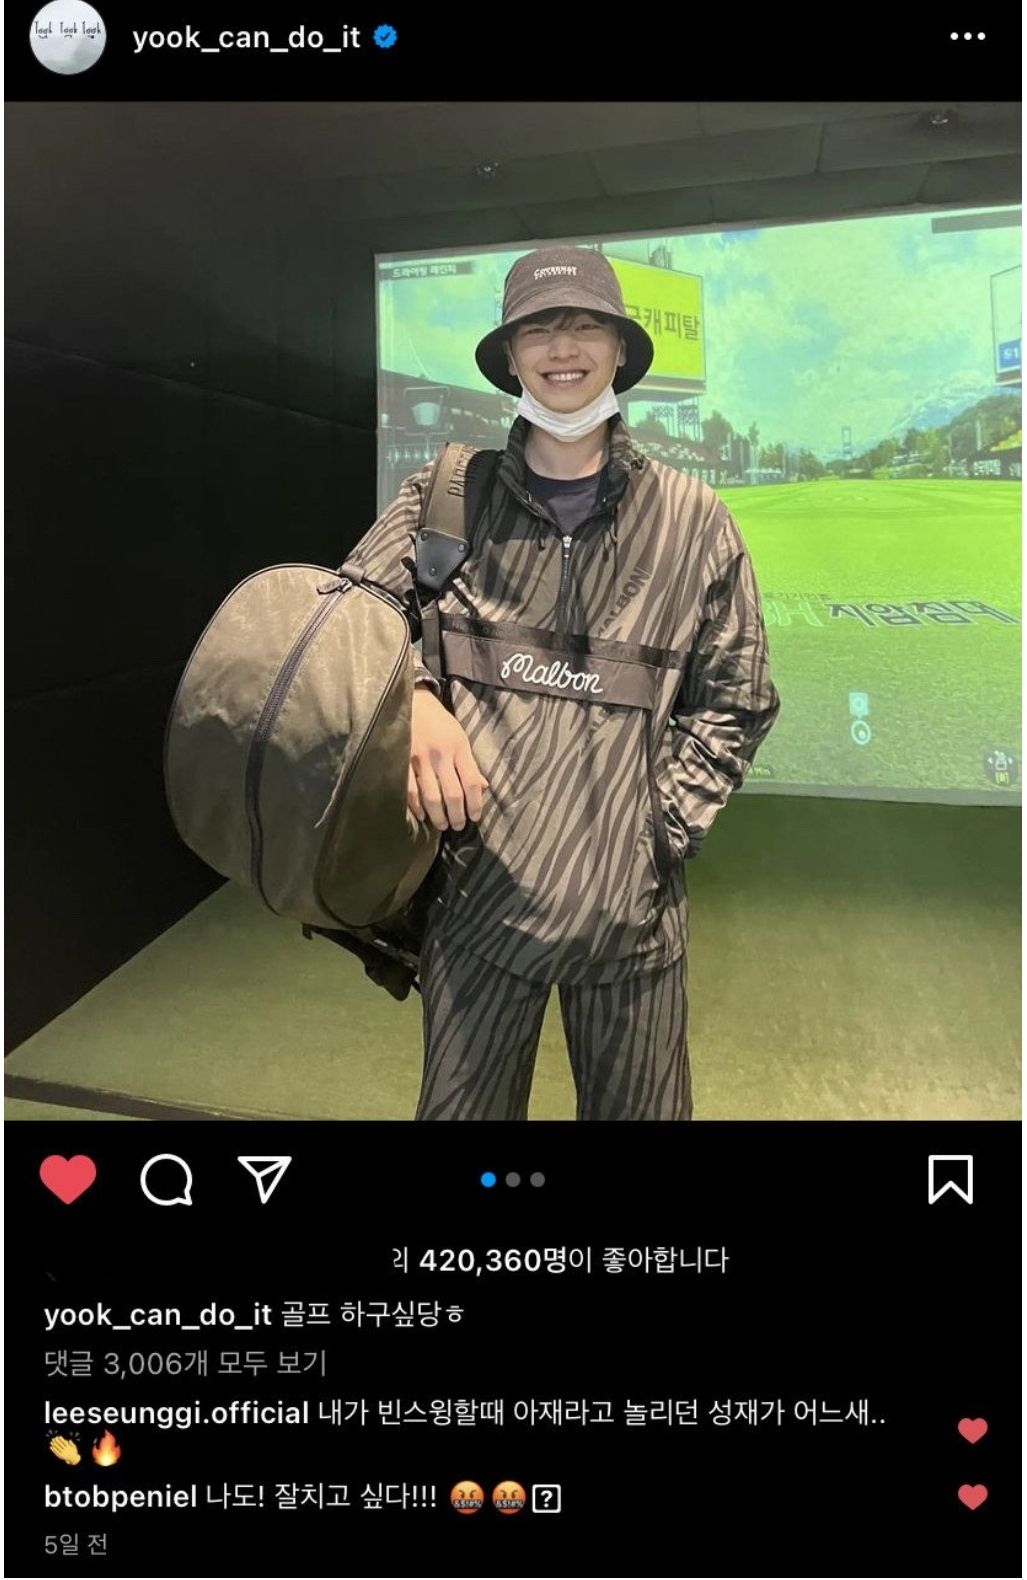 Postingan Sungjae BTOB tentang bermain golf ruangan./Instagram/@yook_can_do_it